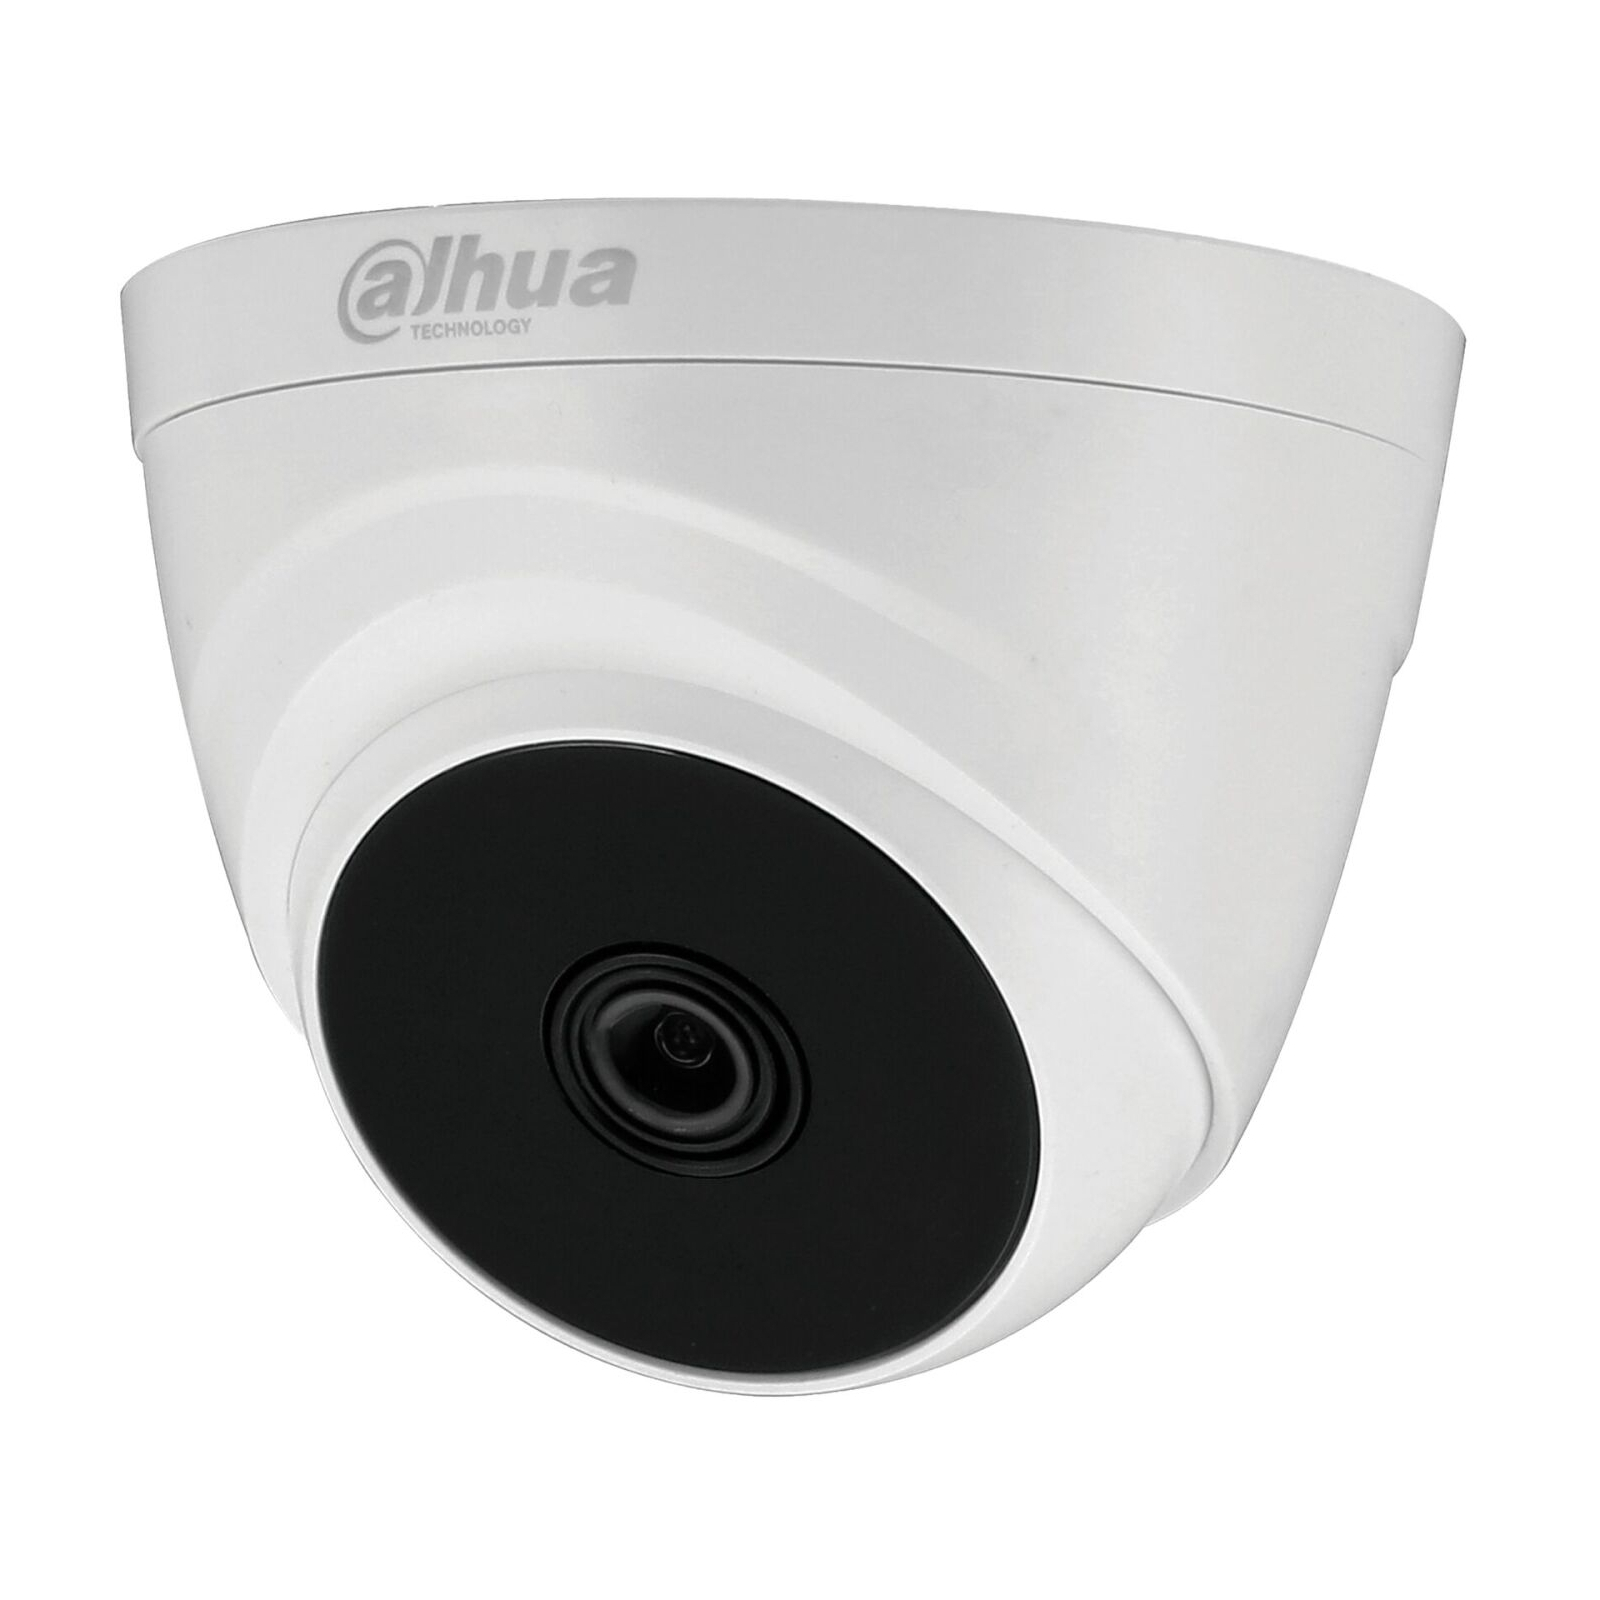 Камера видеонаблюдения Dahua DH-HAC-T1A21P (2.8)